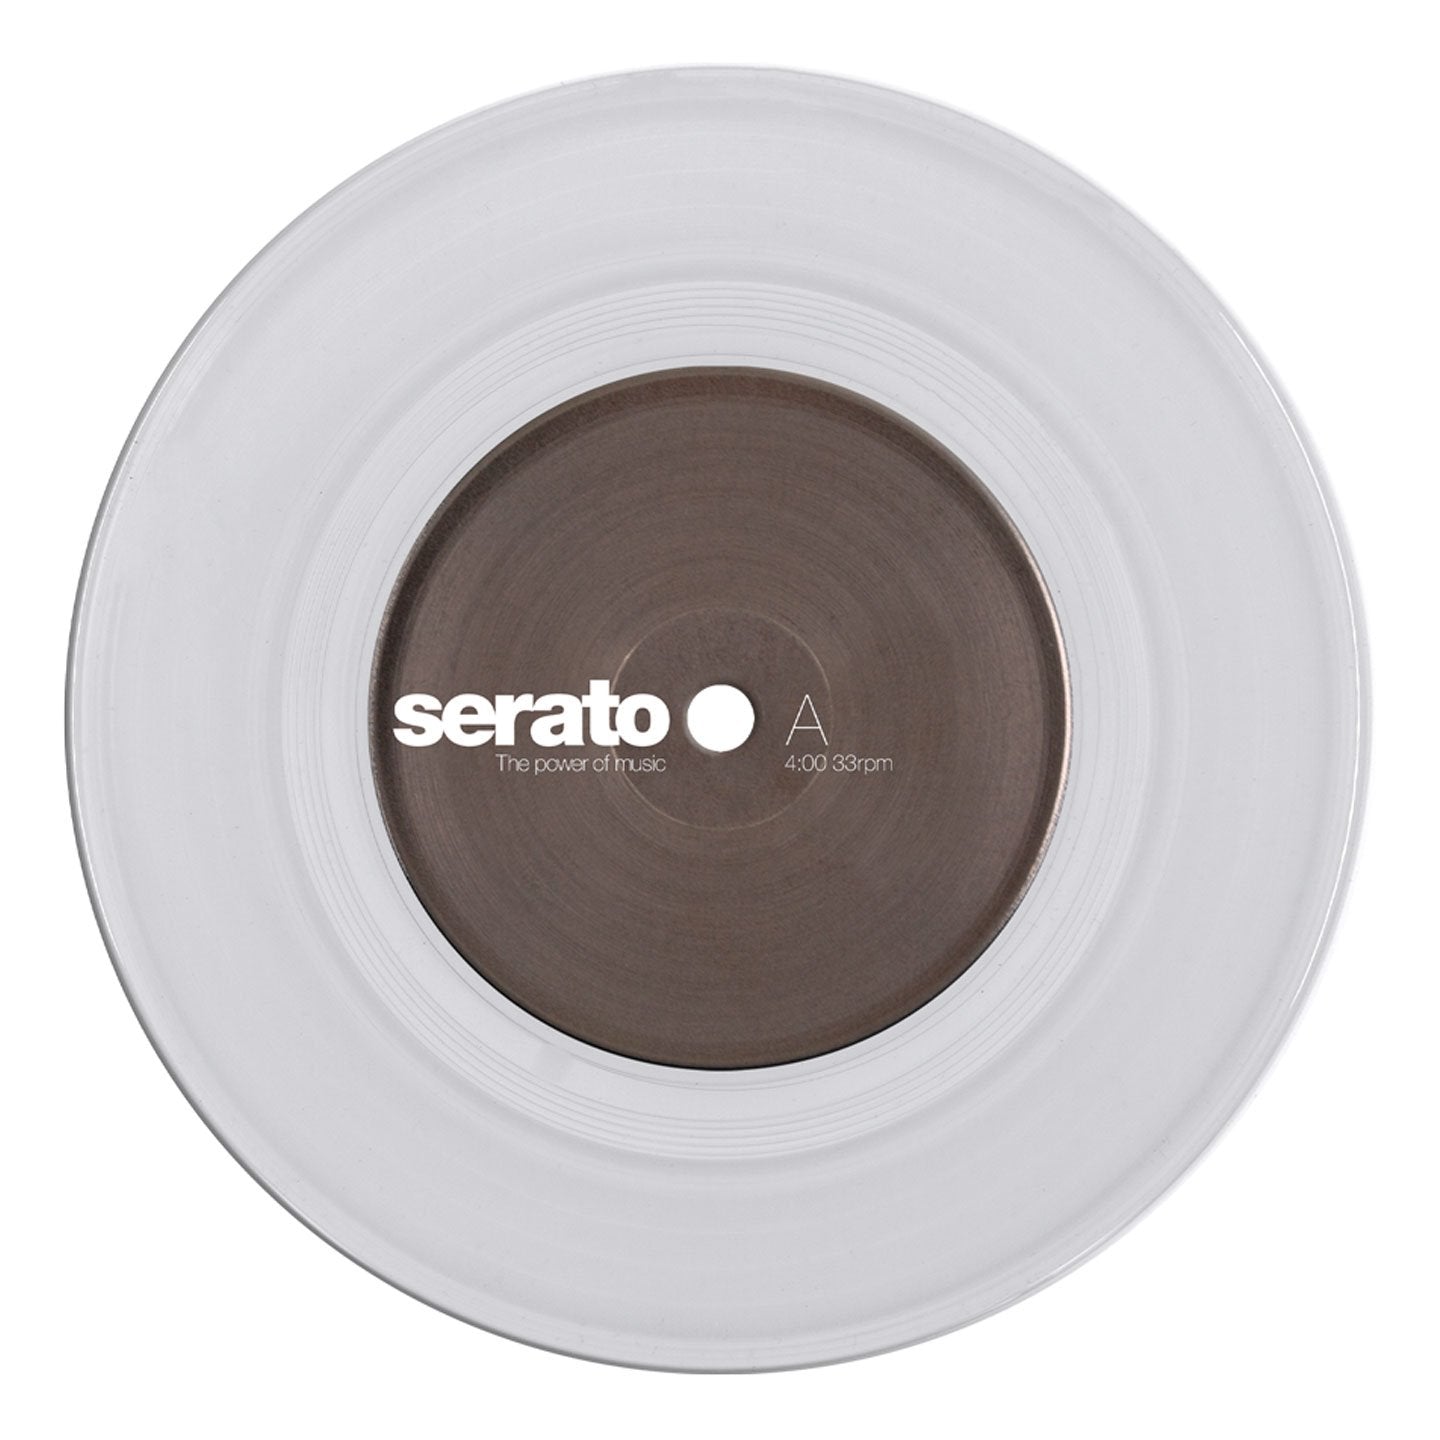 Serato: Performance Series Control Vinyl 2x7" - Clear